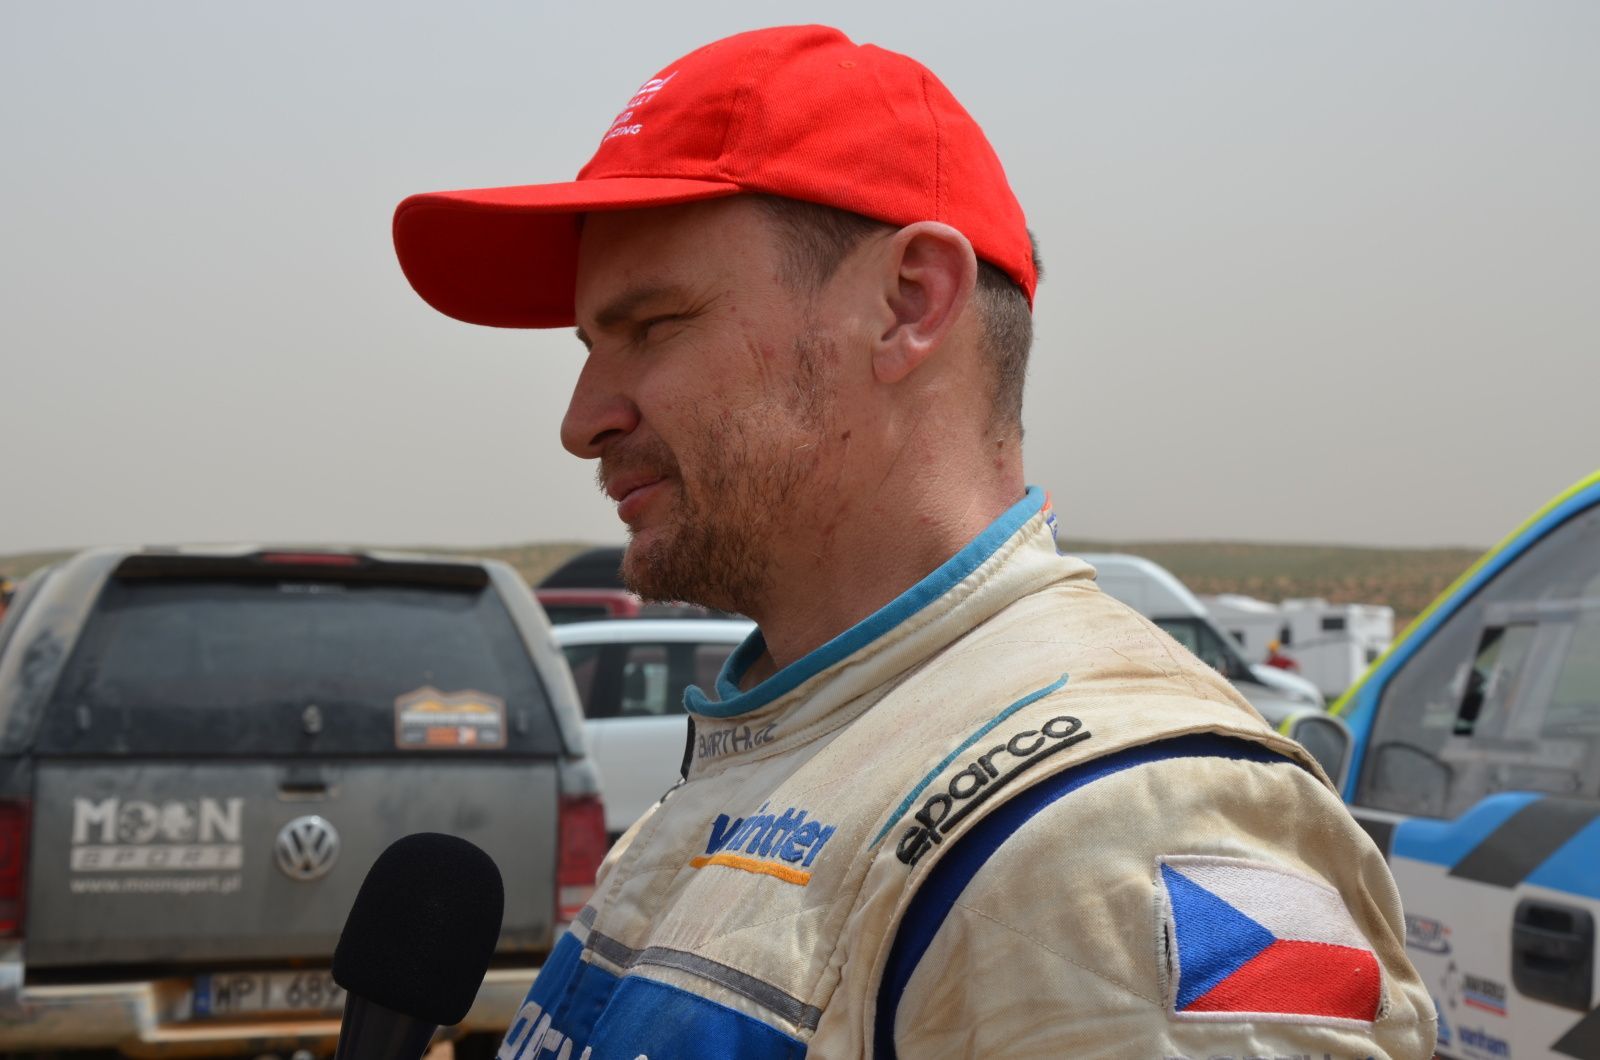 Morocco Desert Challenge 2018: Boris Vaculík, Ford